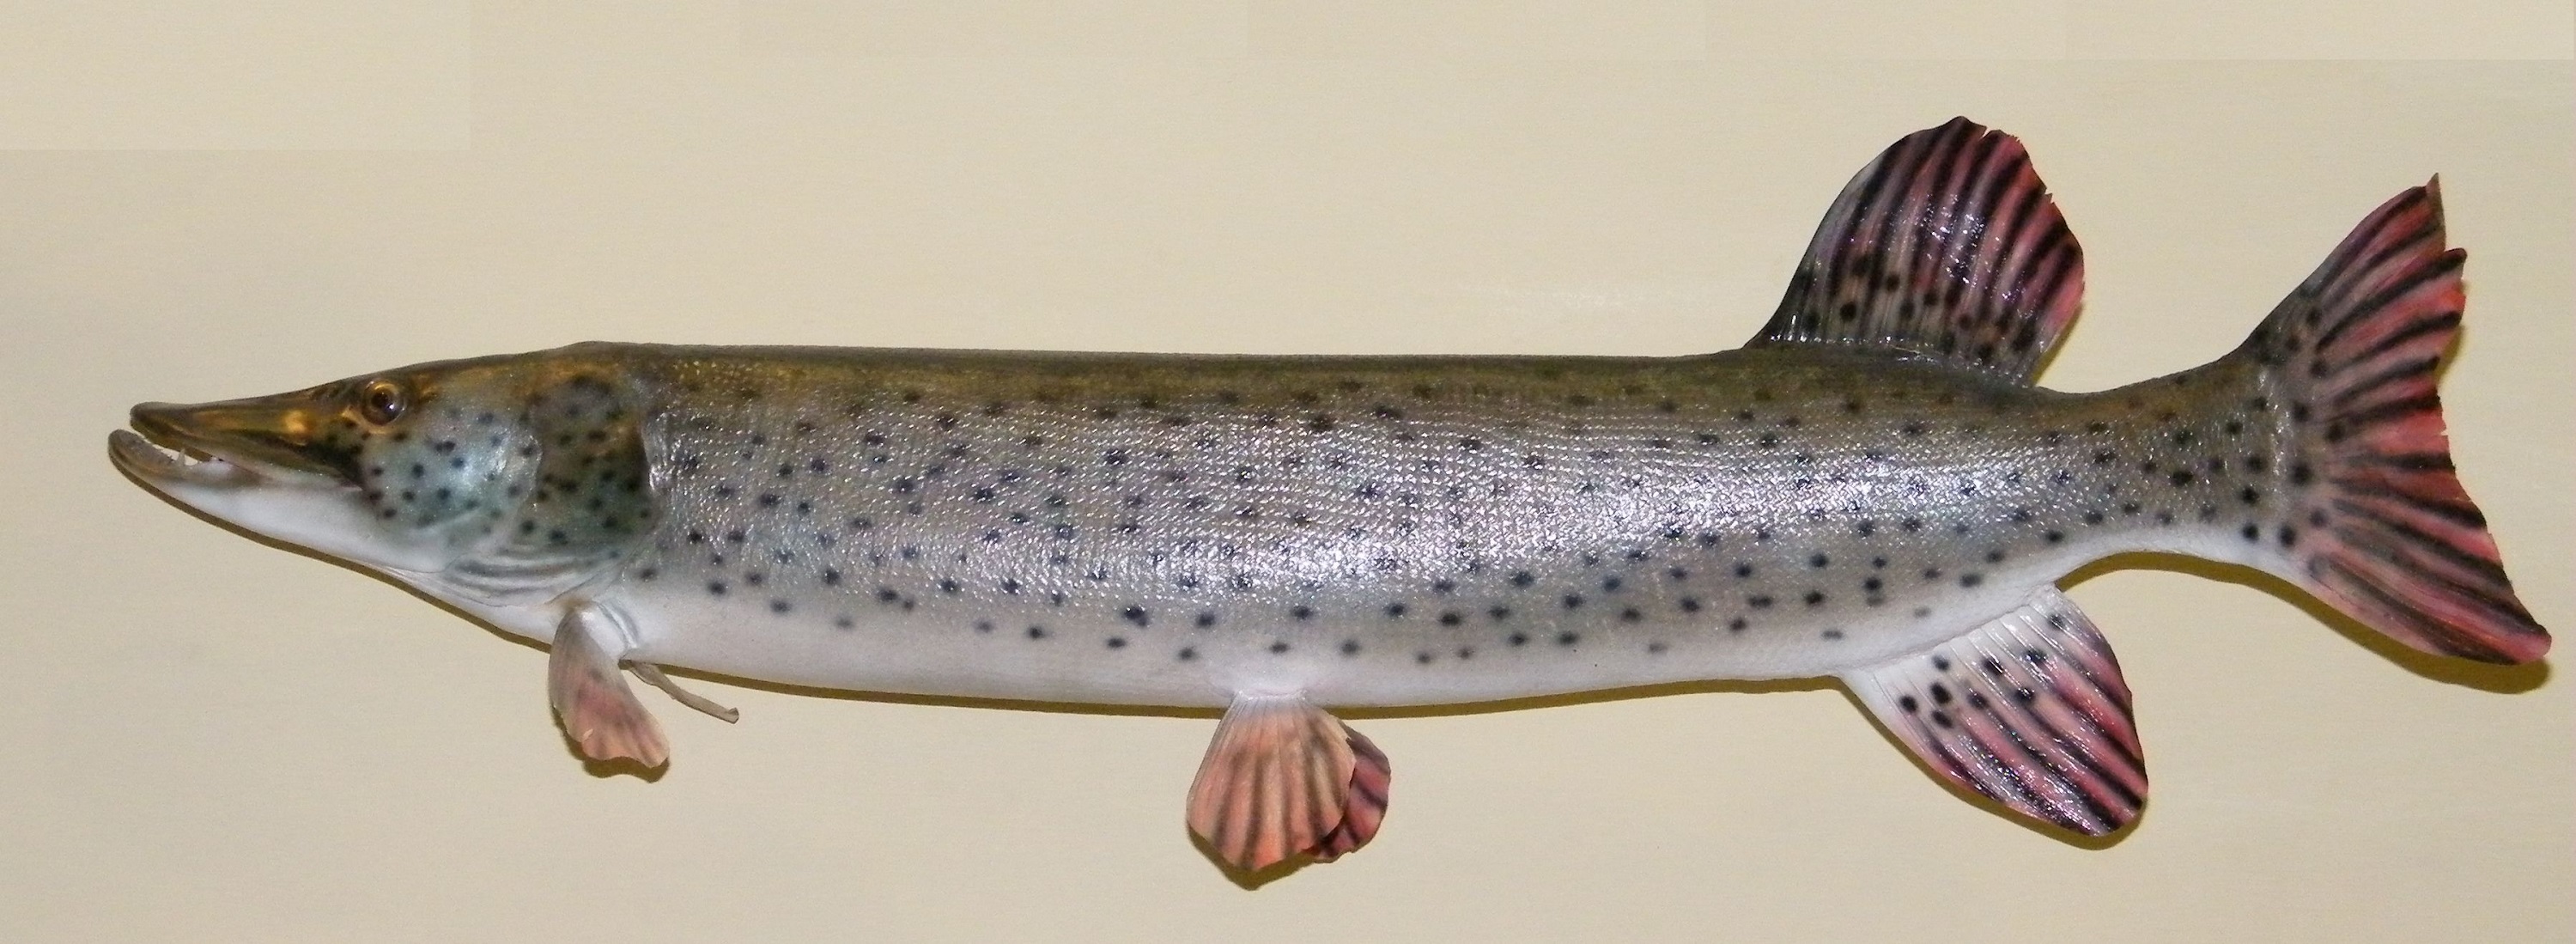 Pike fish, белый Amur, sudak, Juvenile fish, Amur River, Amur, fishing rod,  esox, cyprinidae, Wels catfish